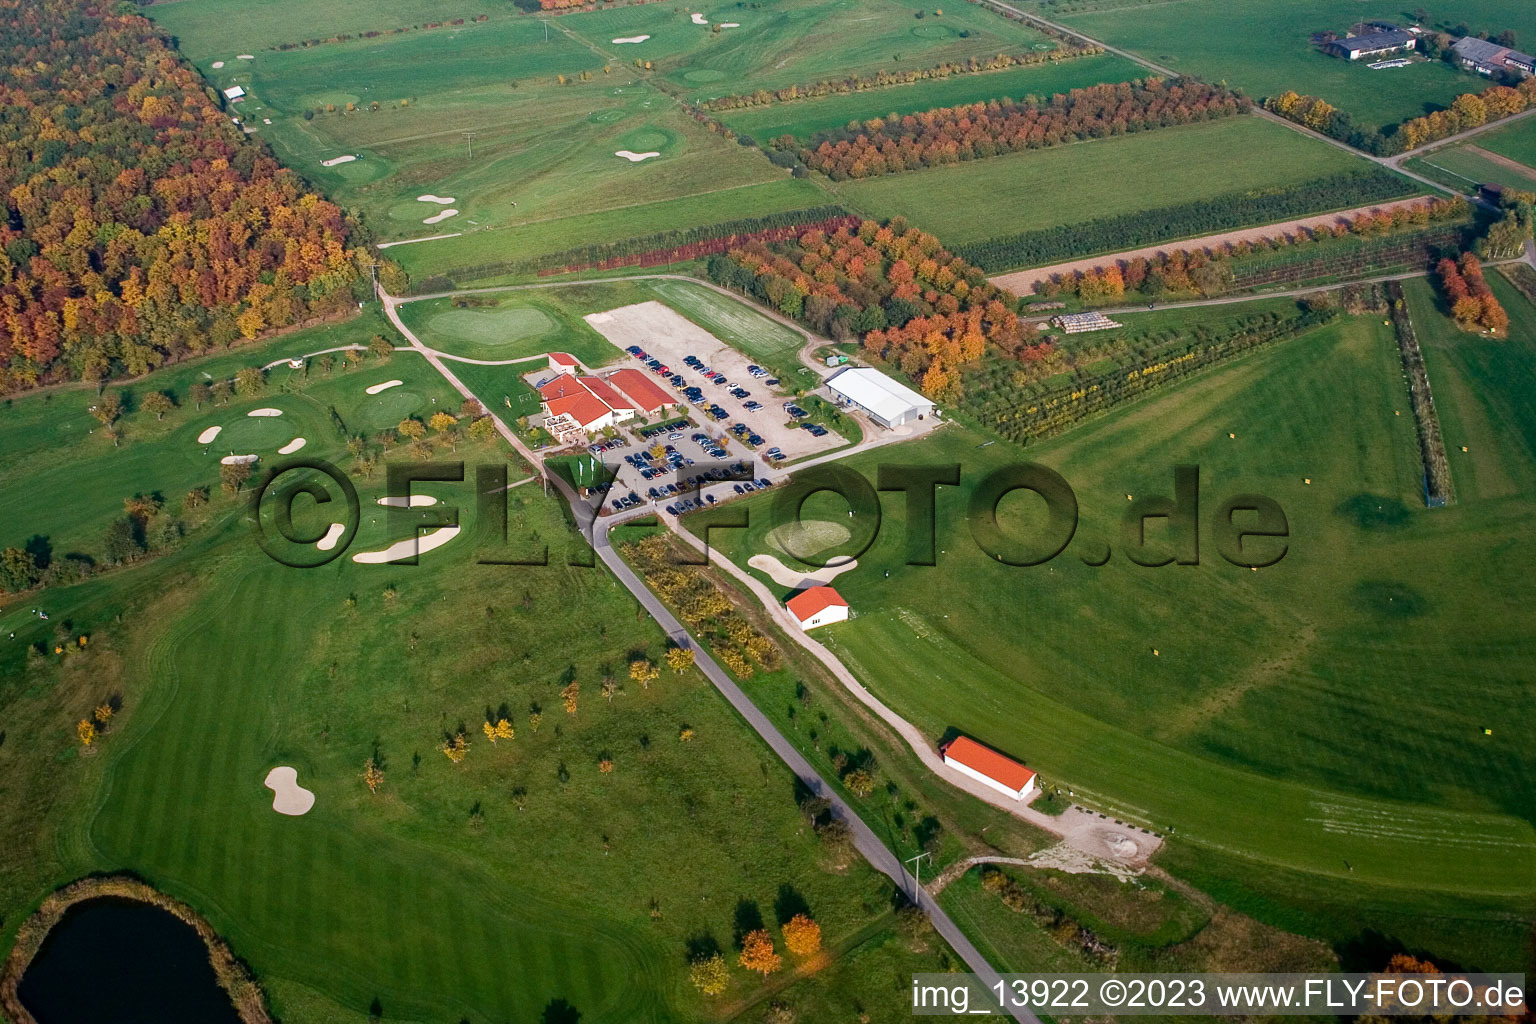 Golf club Urloffen eV in the district Urloffen in Appenweier in the state Baden-Wuerttemberg, Germany from a drone